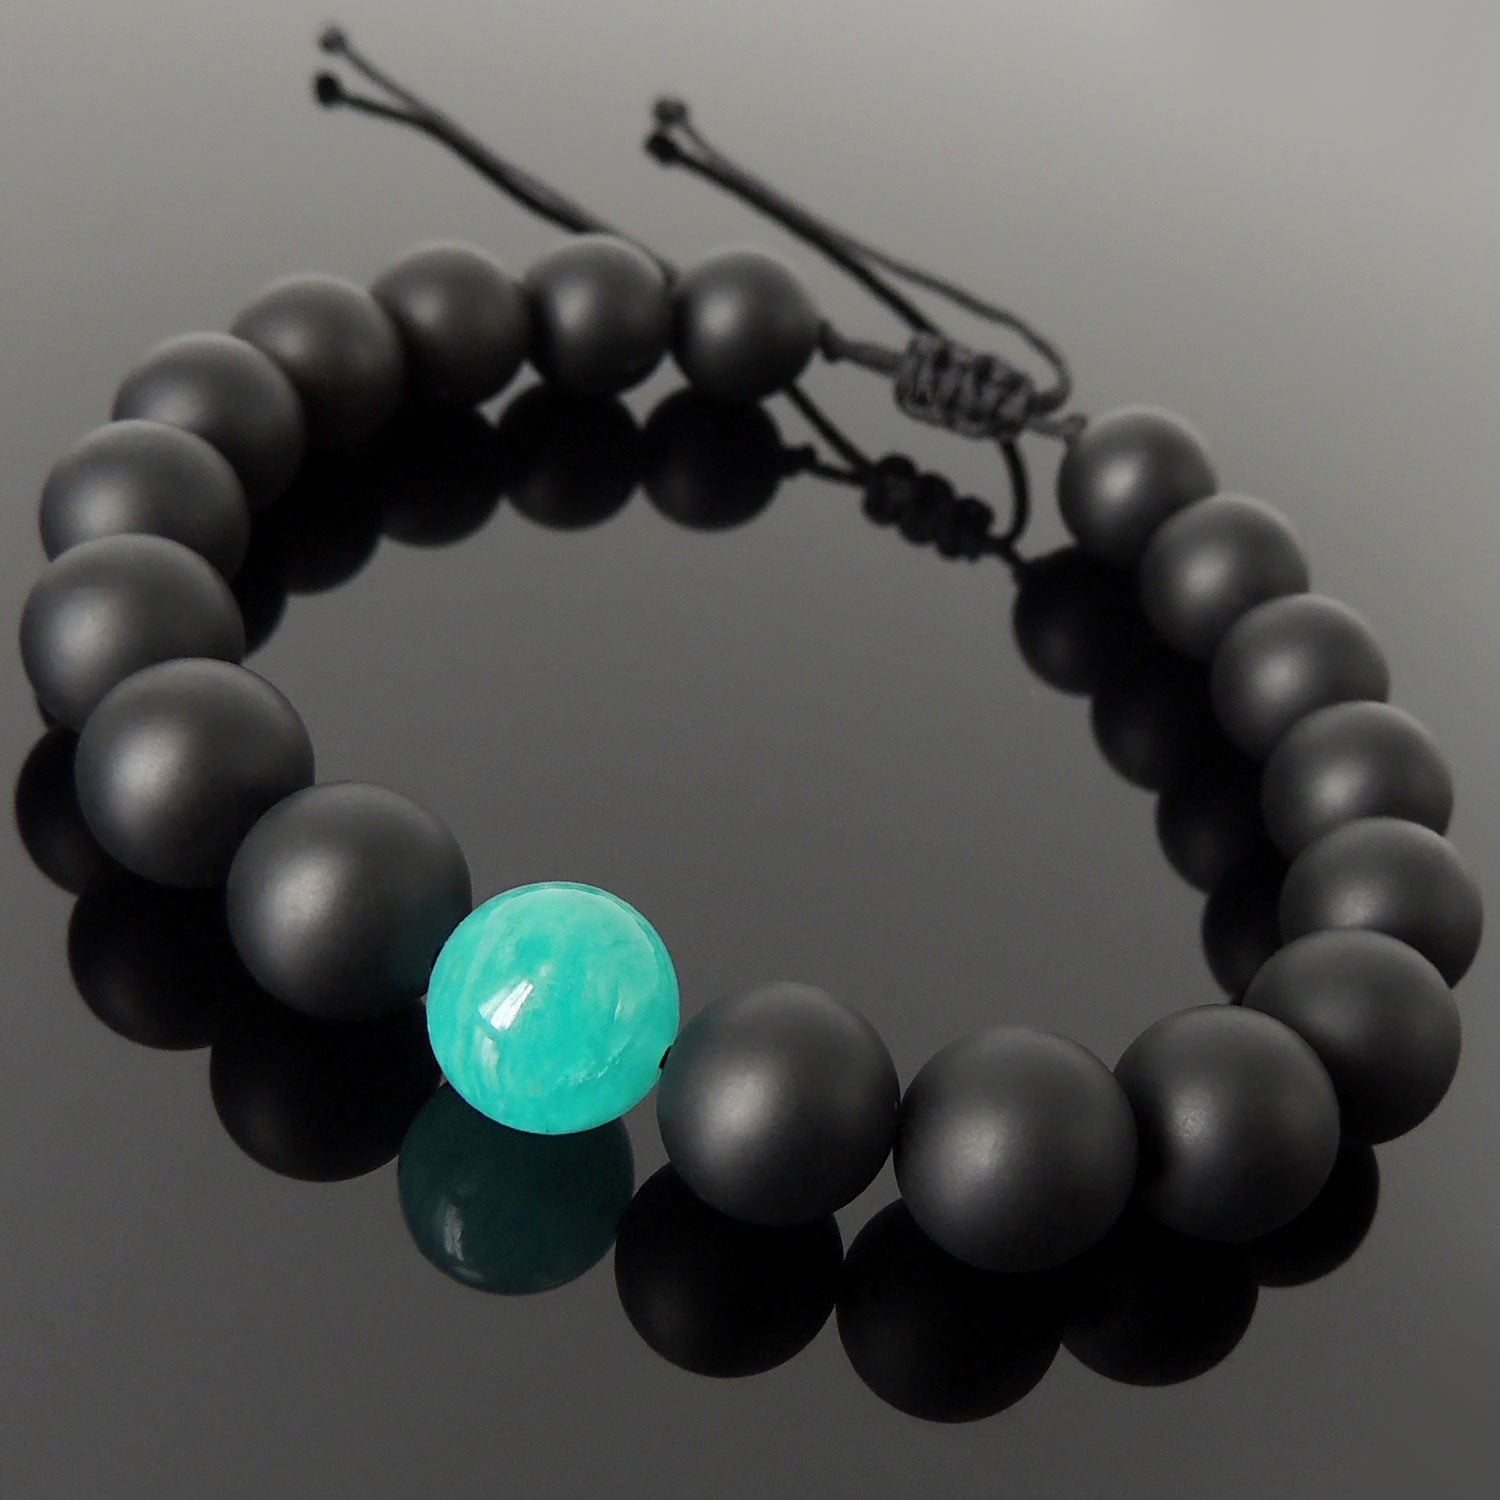 Healing Zen Gemstone Minimal Jewelry - Men's Women's Handmade Braided Bracelet Protection, Casual Wear with 10mm Amazonite, Matte Black Onyx, Adjustable Drawstring BR1768